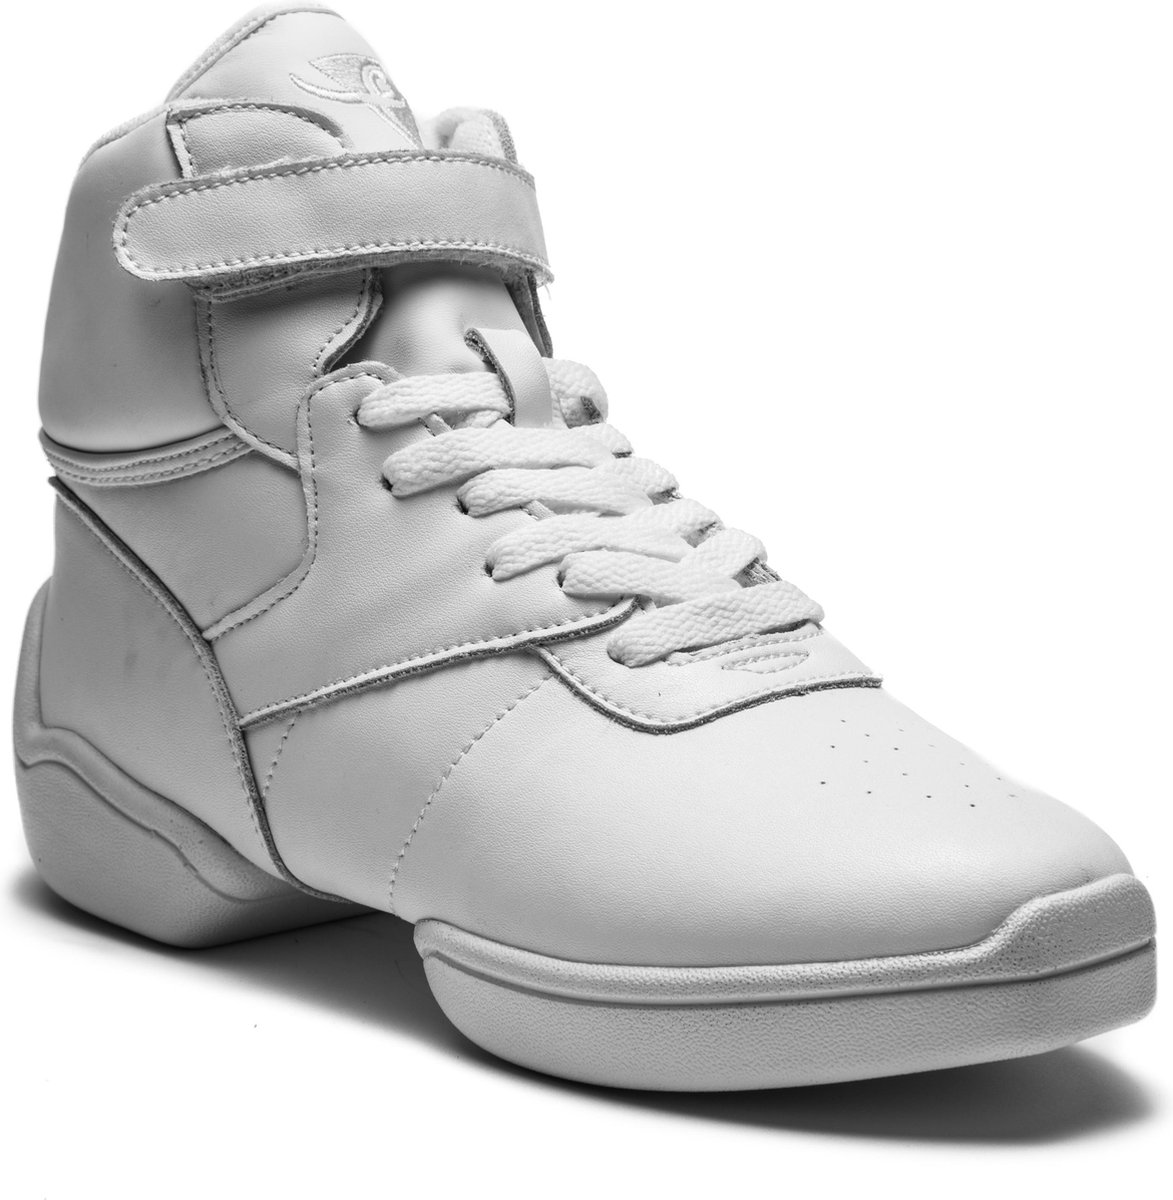 Rumpf 1500 High Top Sneaker Leather upper white Jazz Street Hip Hop wit Maat 44.5, UK 10